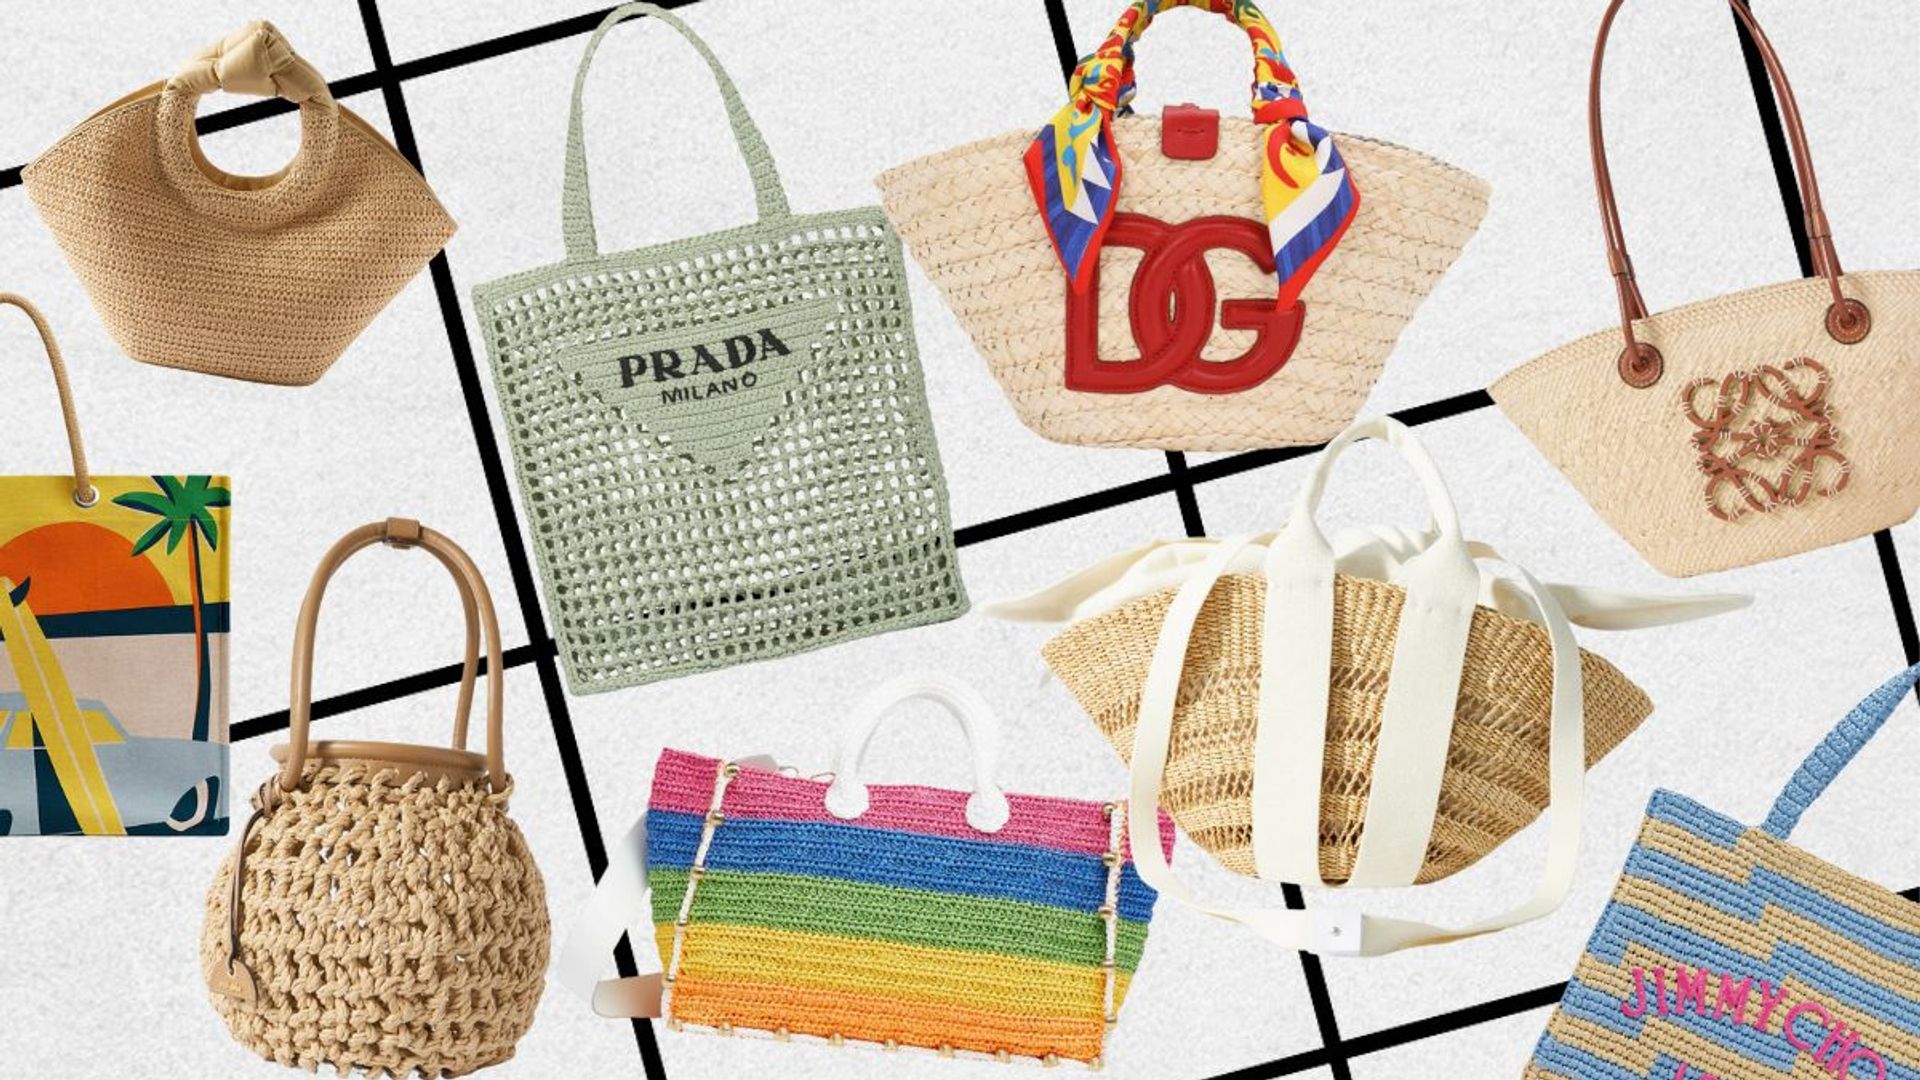 Buy YXILEE Handmade Straw Purses for Women | Summer Medium Satchel Hobo  Woven Bag Foldable Beach Tote Basket Bags | Women's Shoulder Handbag for  Picnic Travel Vacation Essentials, Khaki at Amazon.in